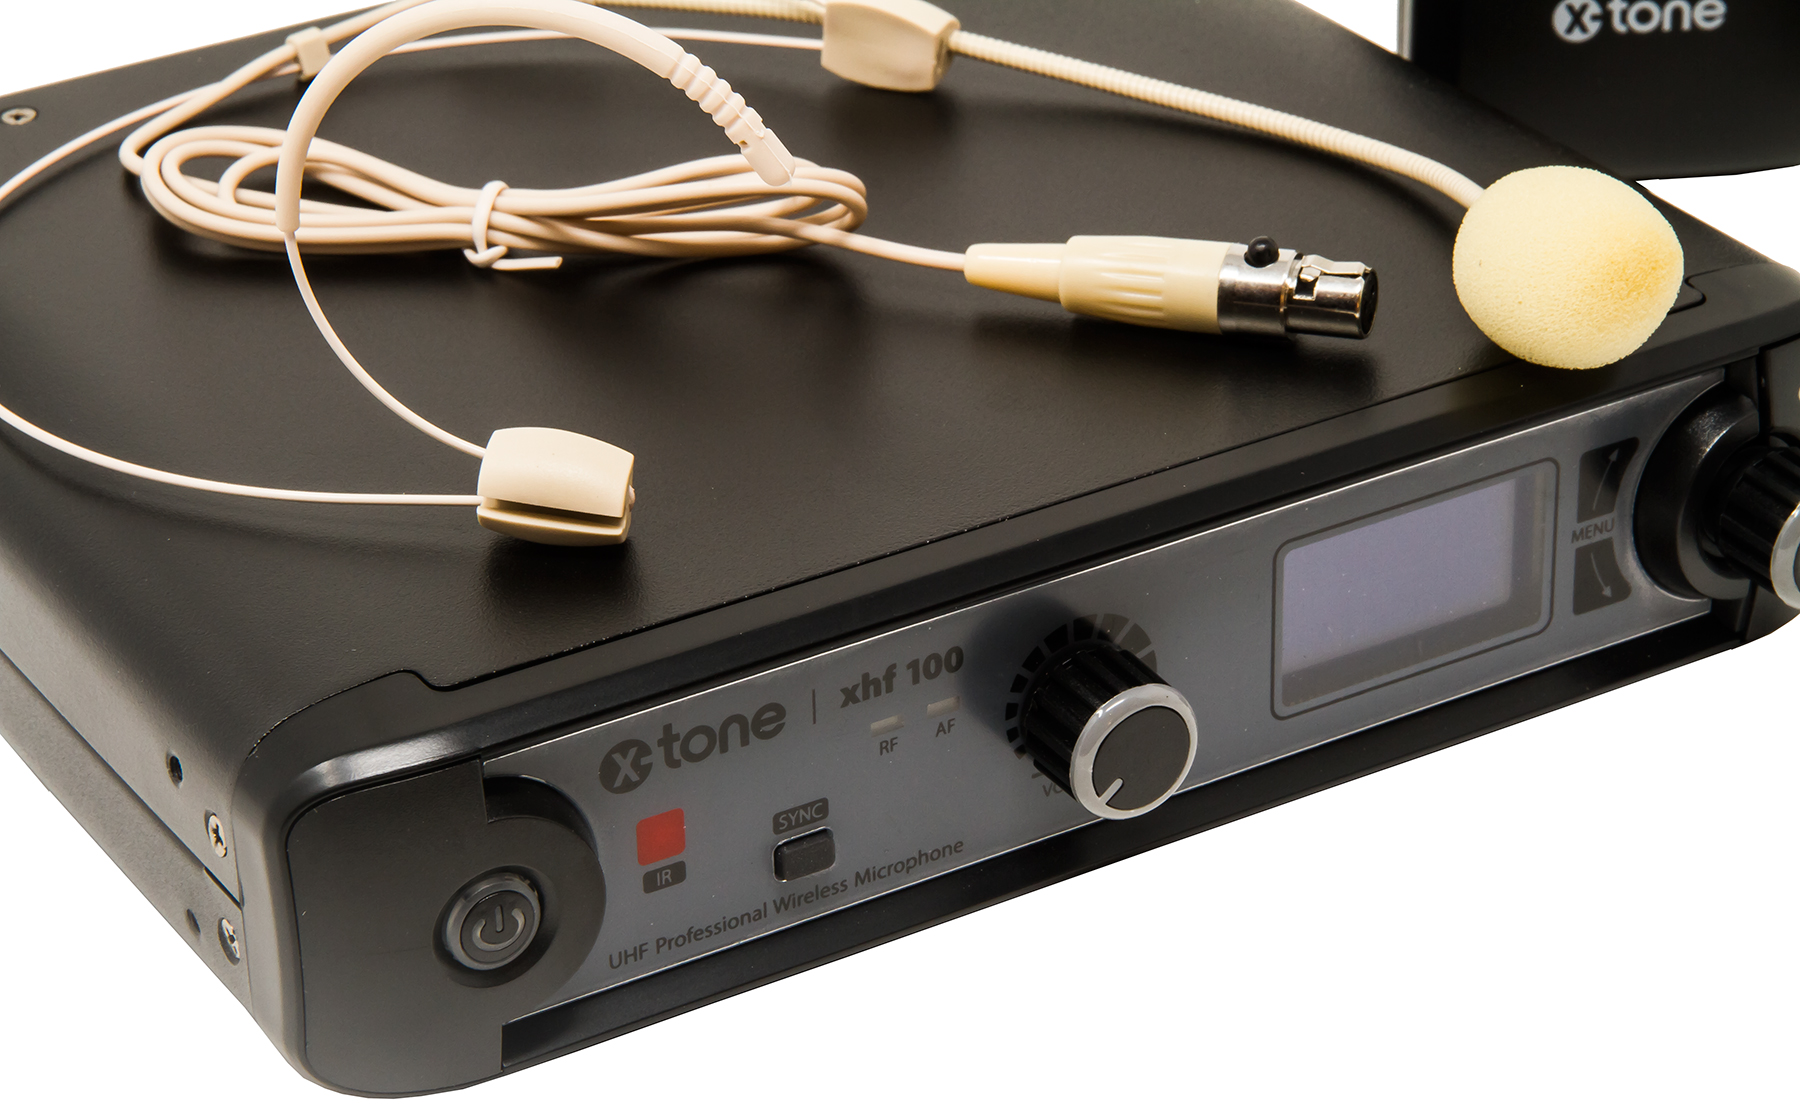 X-tone Xhf100h Systeme Hf Serre Tete Frequence Fixe - Wireless Headset-Mikrofon - Variation 1